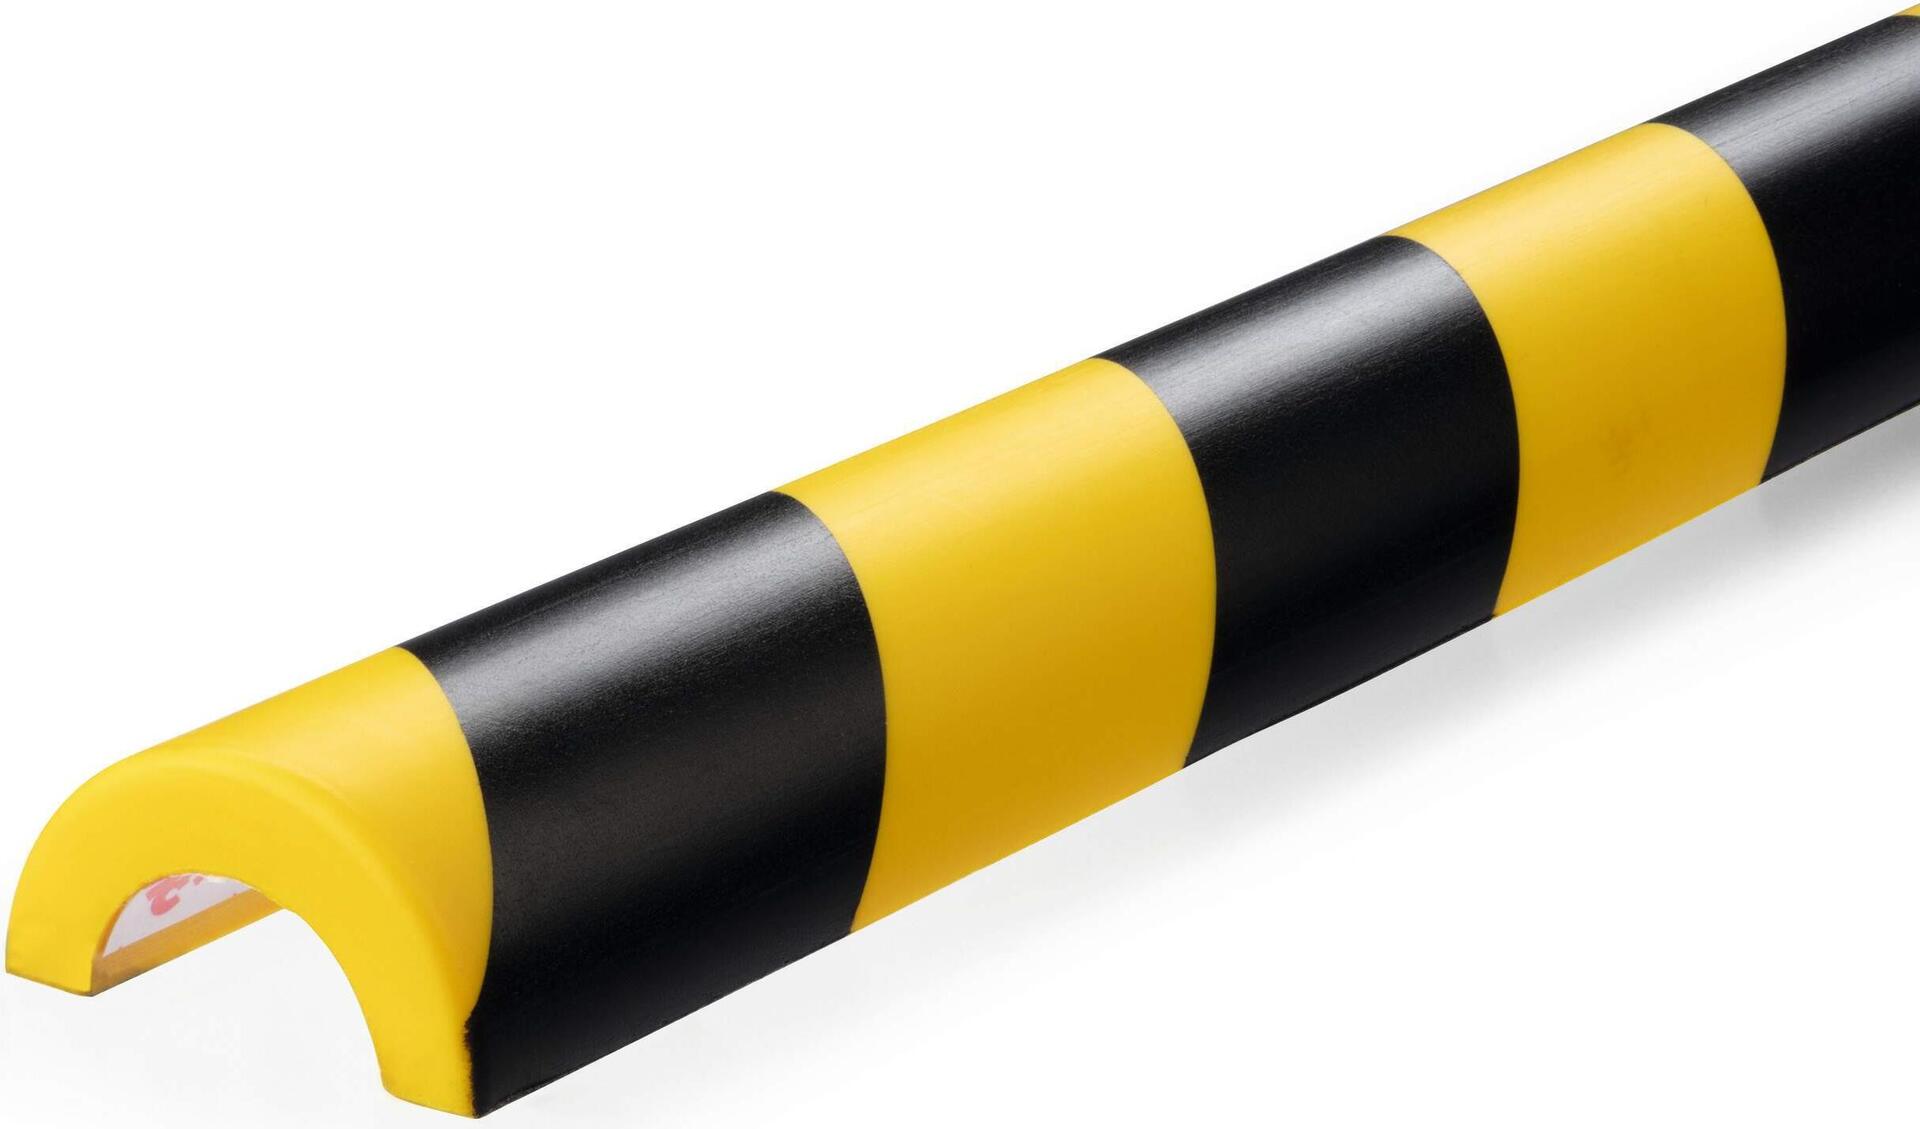 DURABLE Rohrschutzprofil P30, Farbe: gelb/schwarz, Art. Nr. 1115130, 5 ST (1115130)